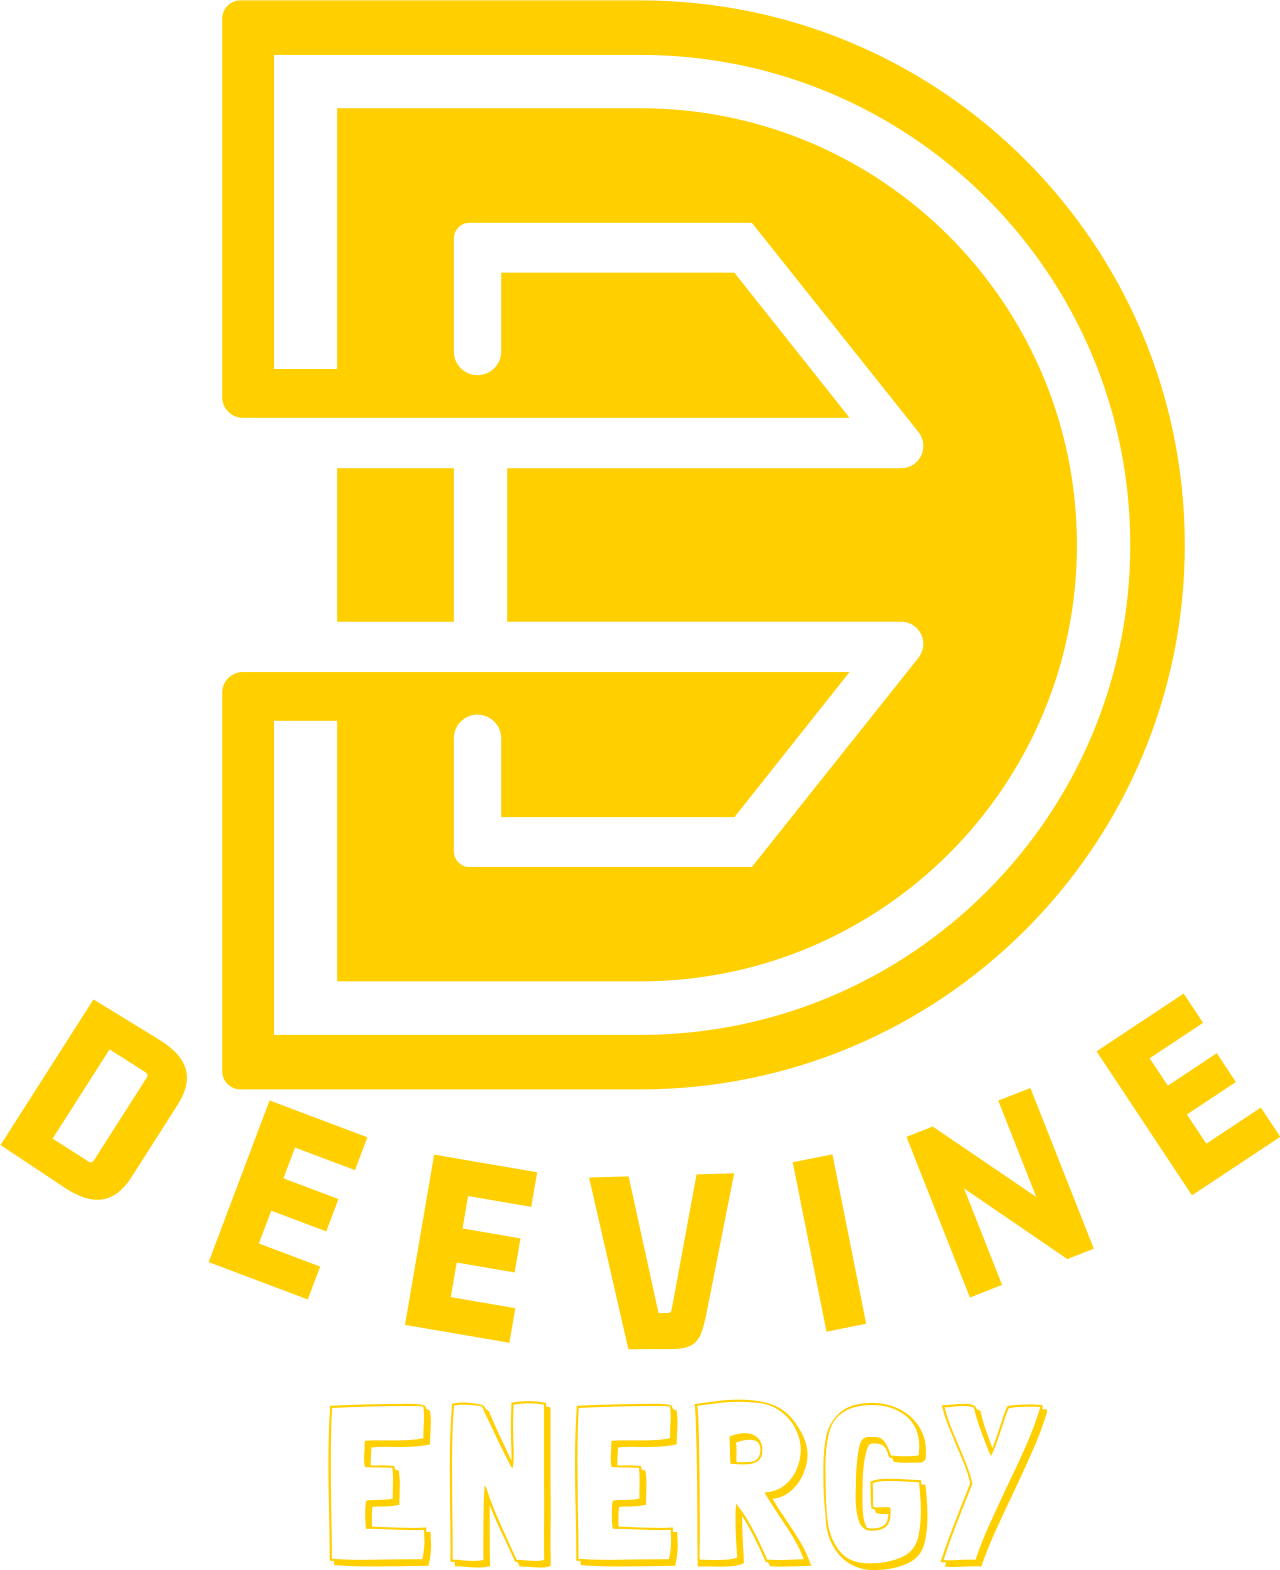 DEEVINE's web page